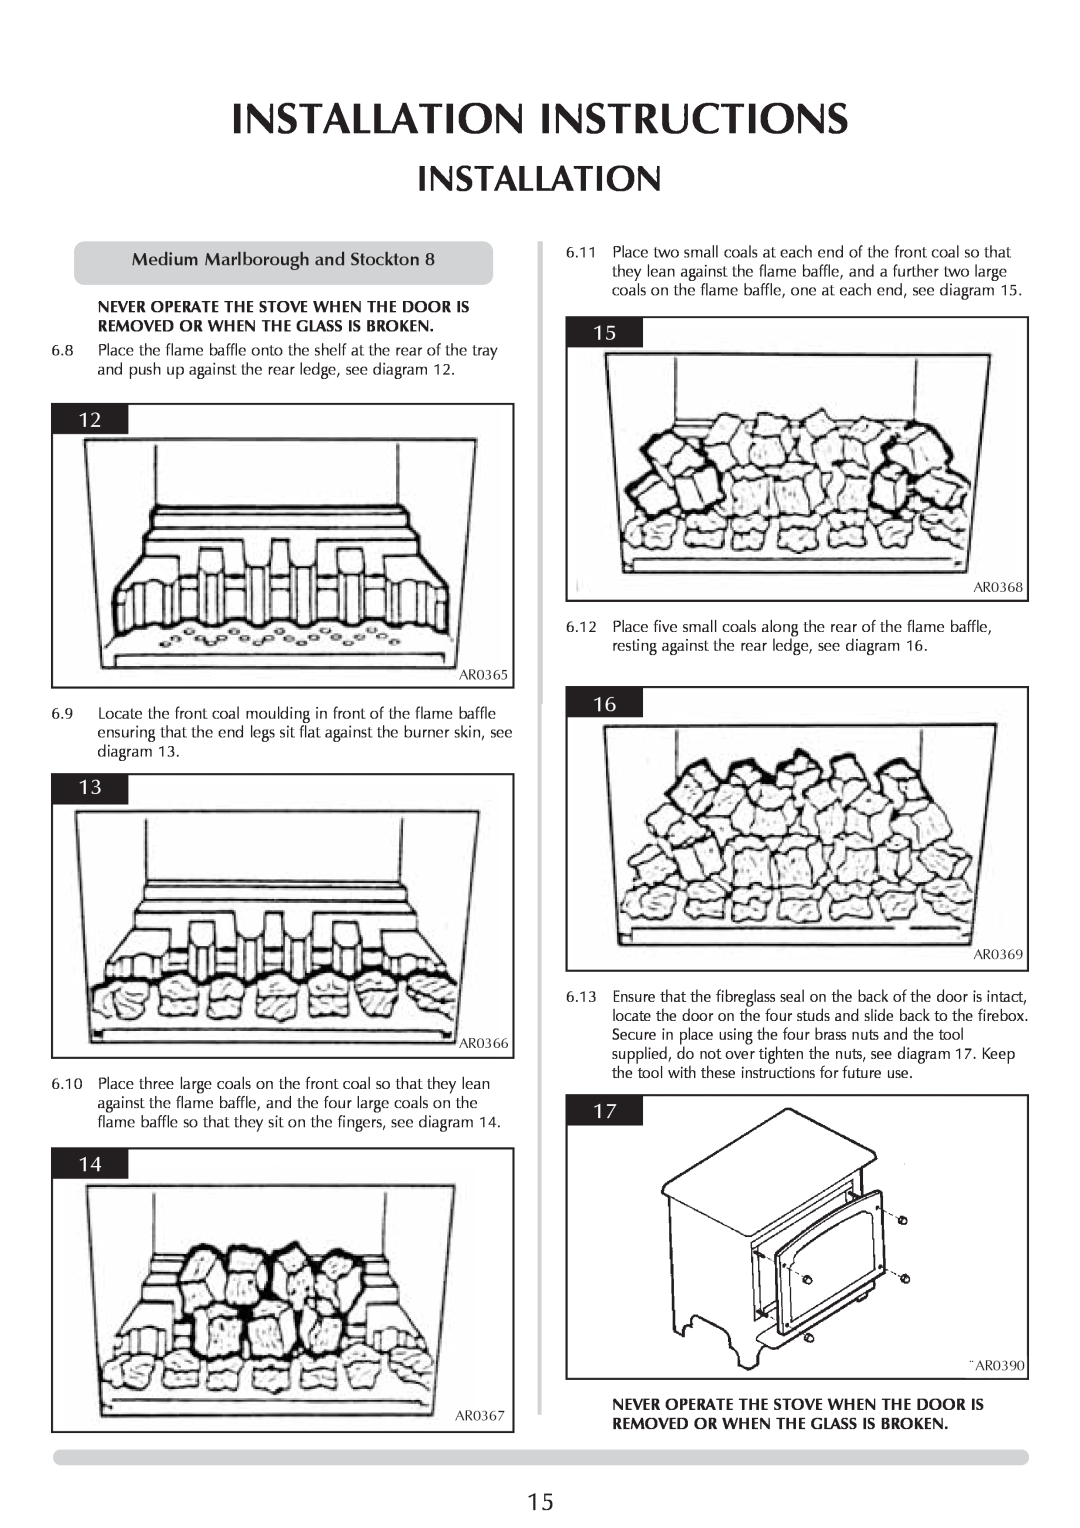 Stovax Coal Effect Stove Range manual Installation Instructions, Medium Marlborough and Stockton, AR0365 